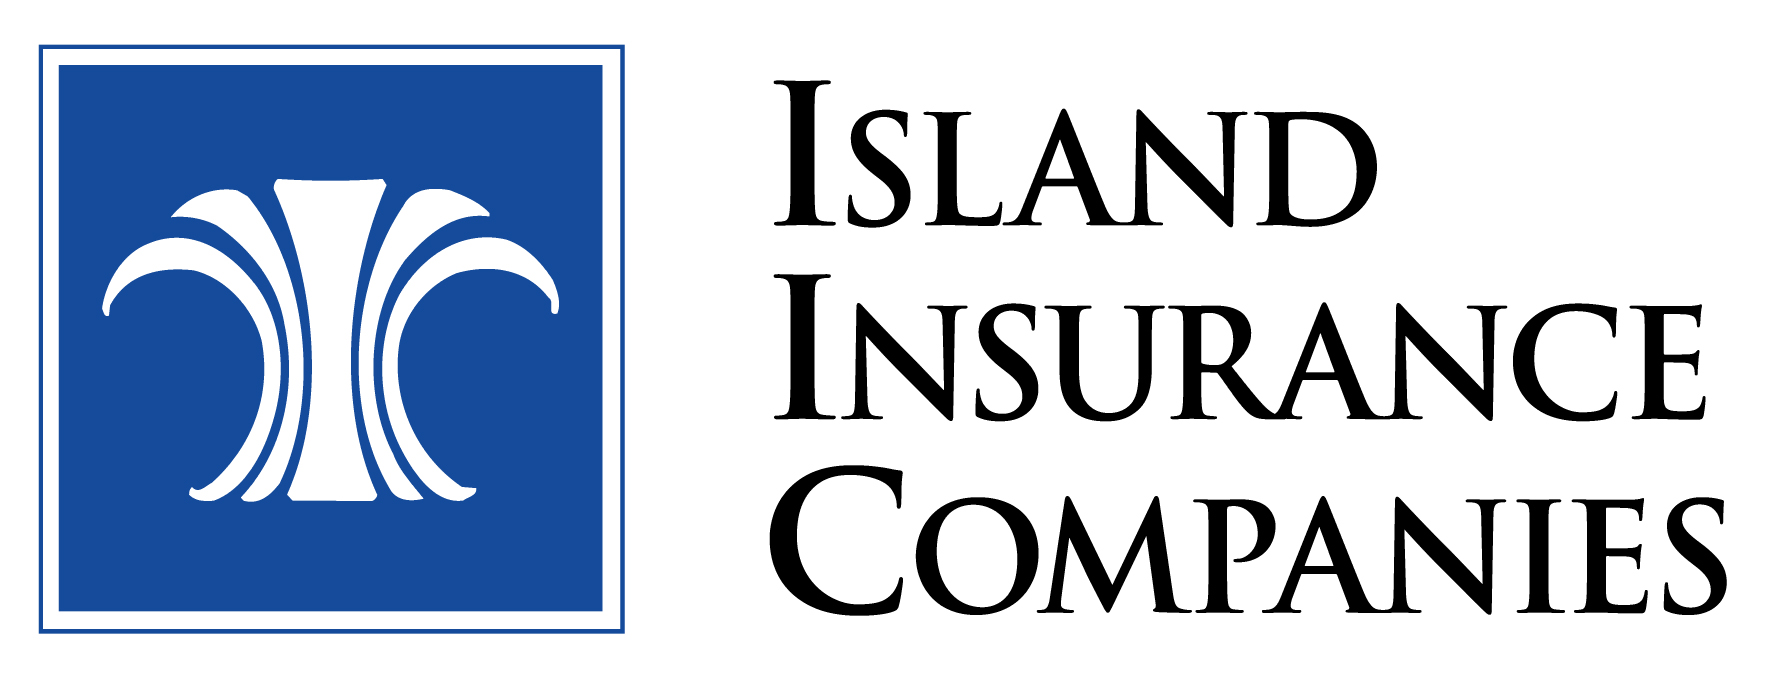 Island Insurance companies logo